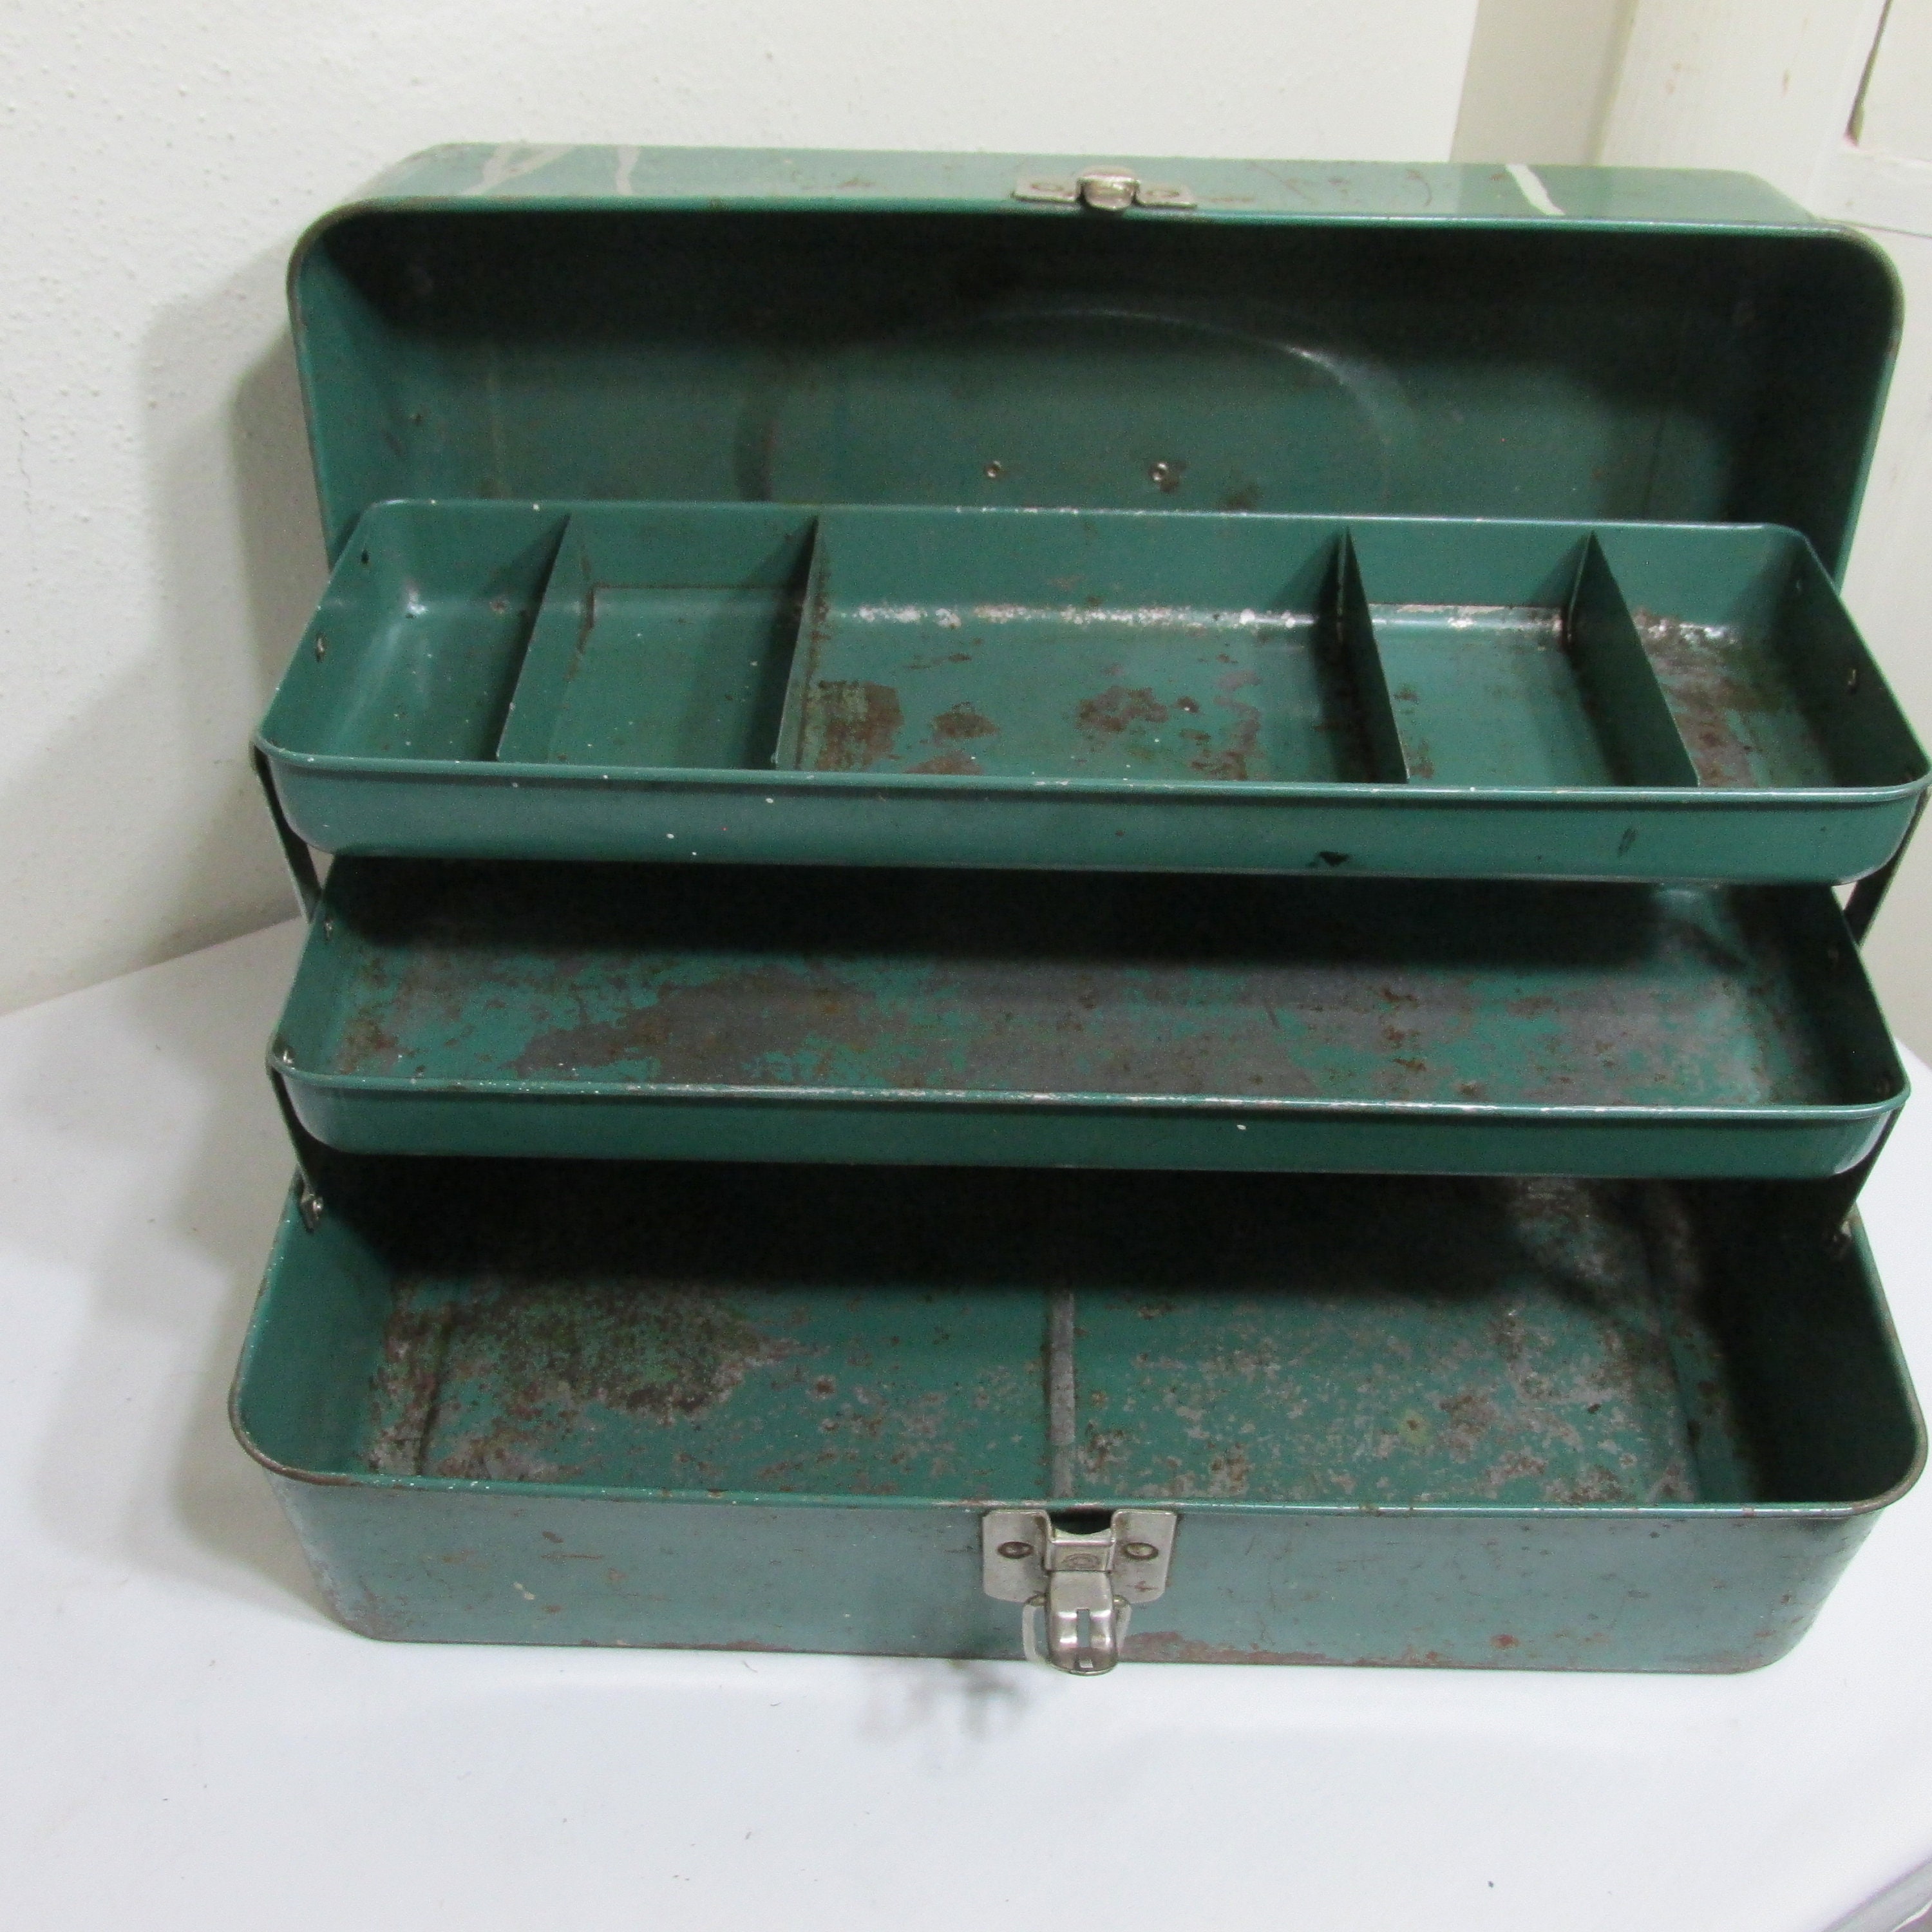 Metal Tackle Box Vintage Rustic Fishing Gear Craft Supply